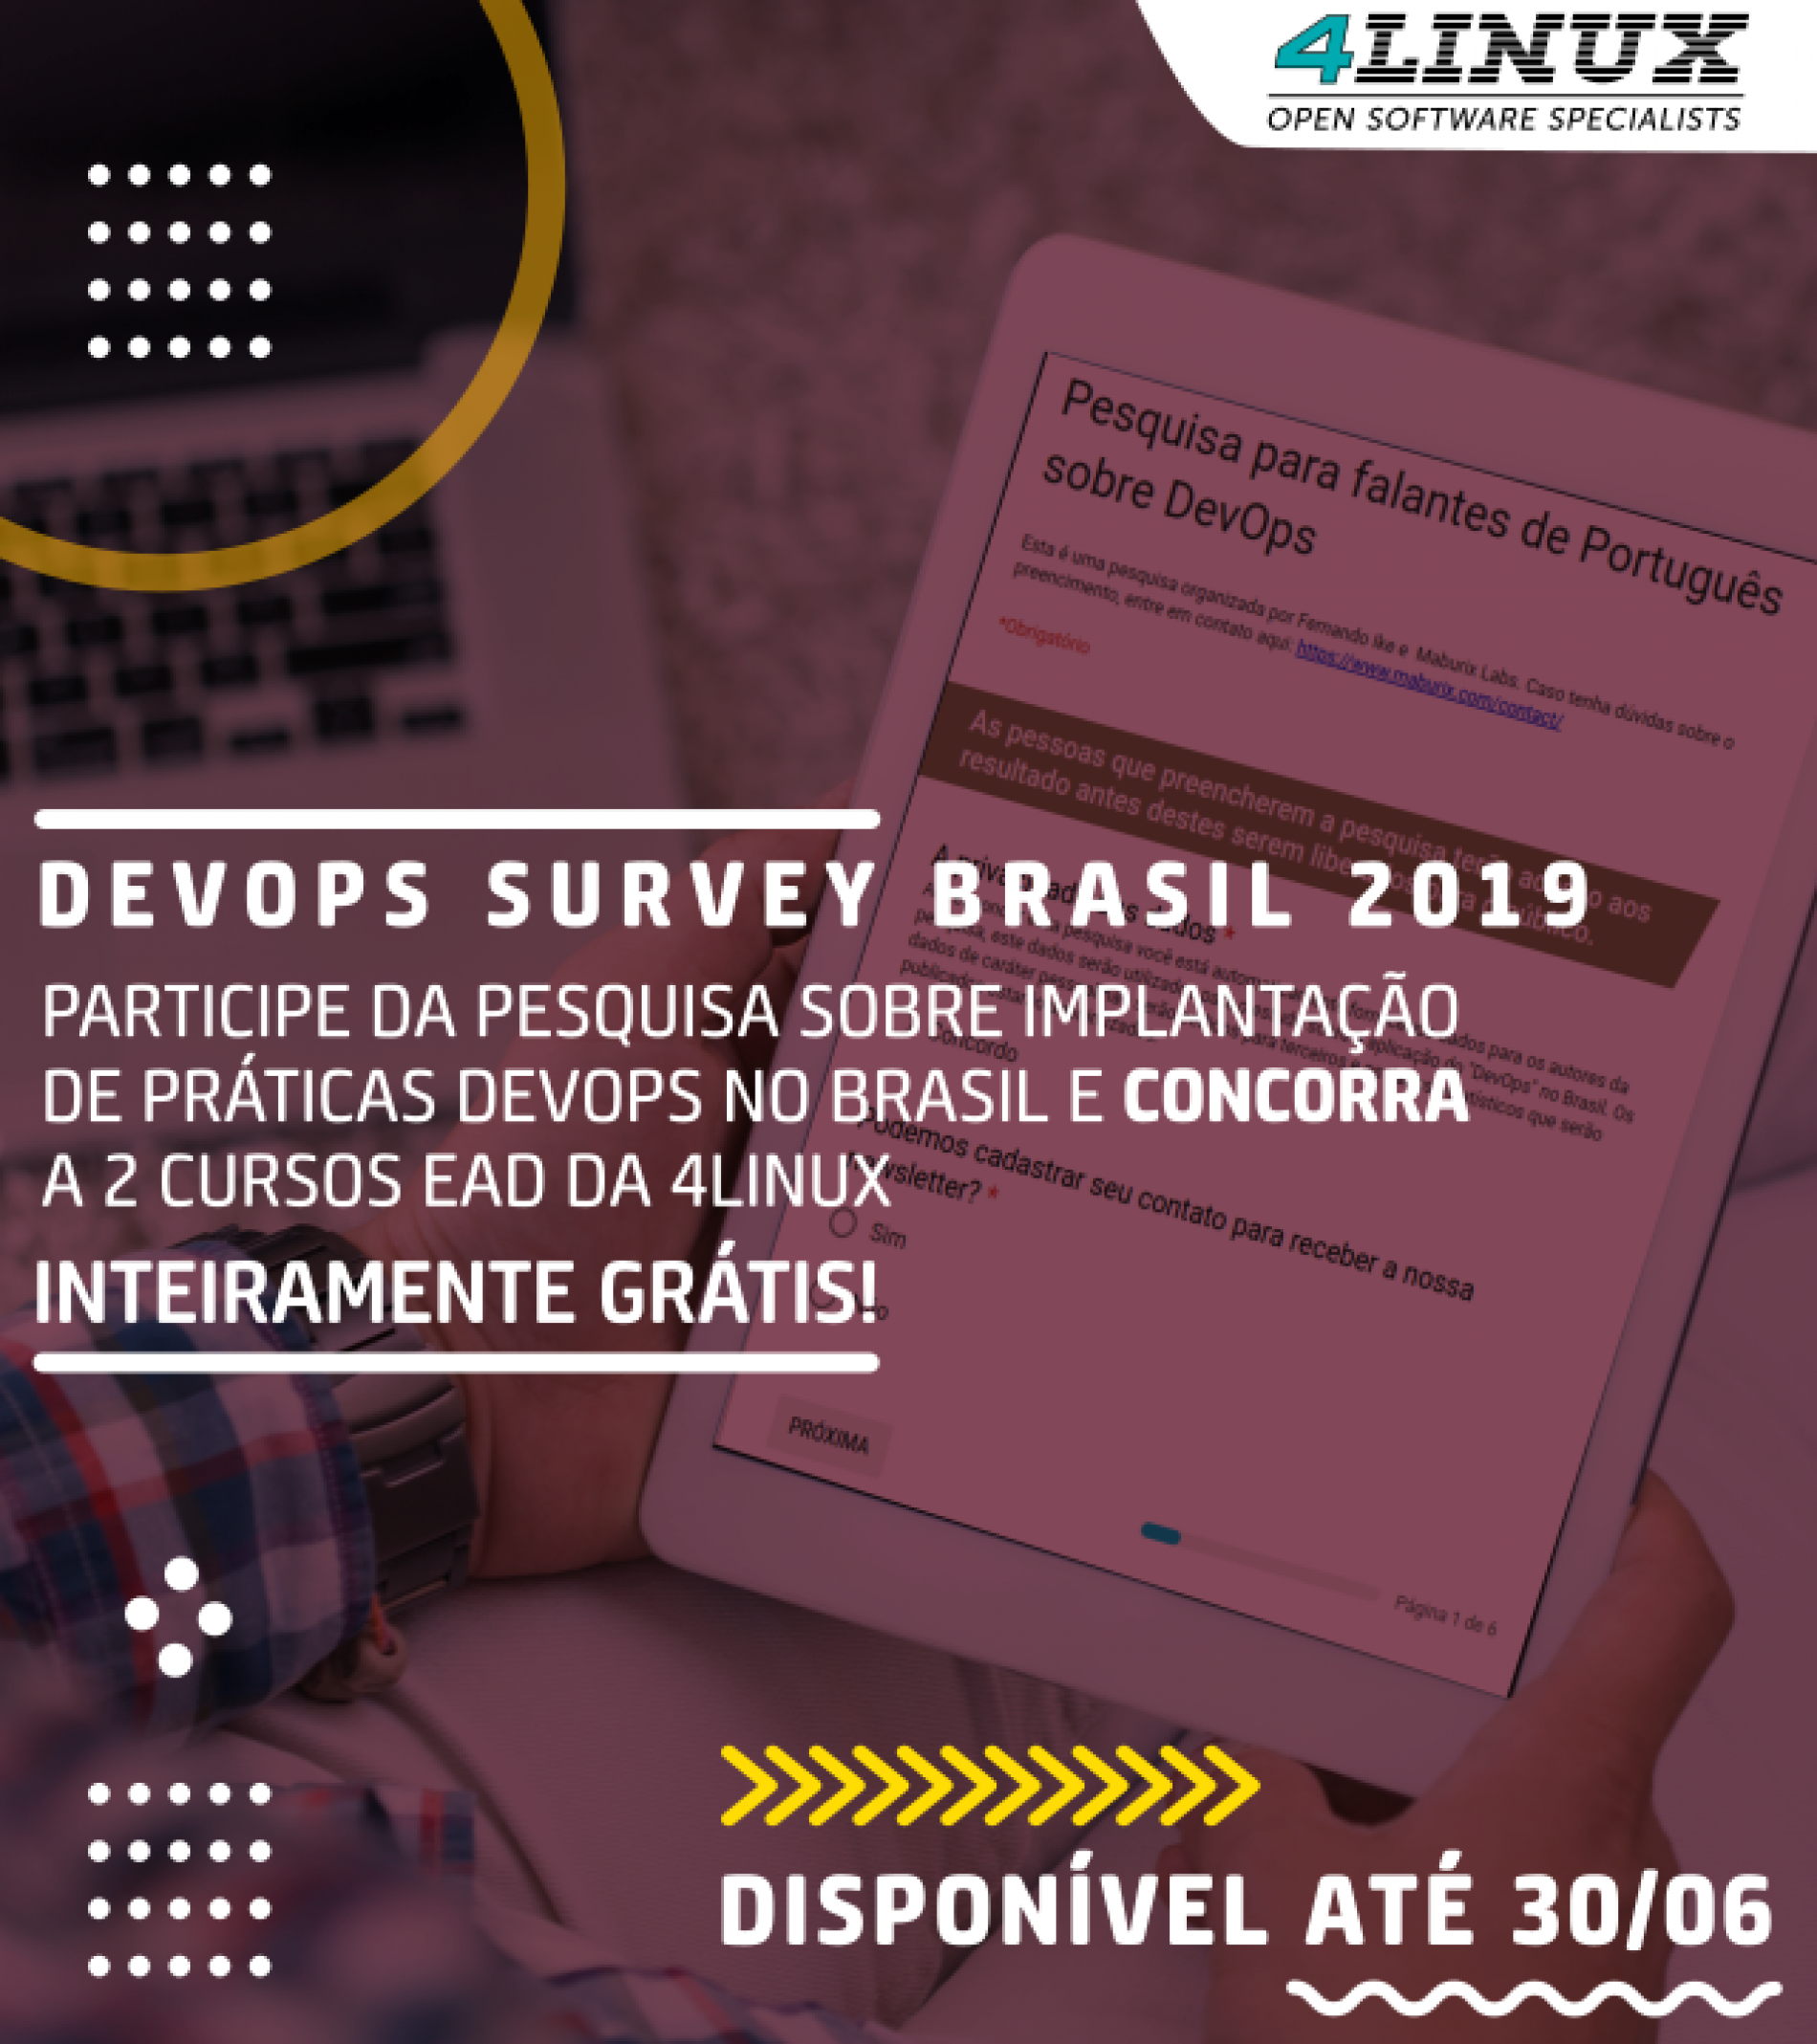 DevOps Survey Brazil 2019